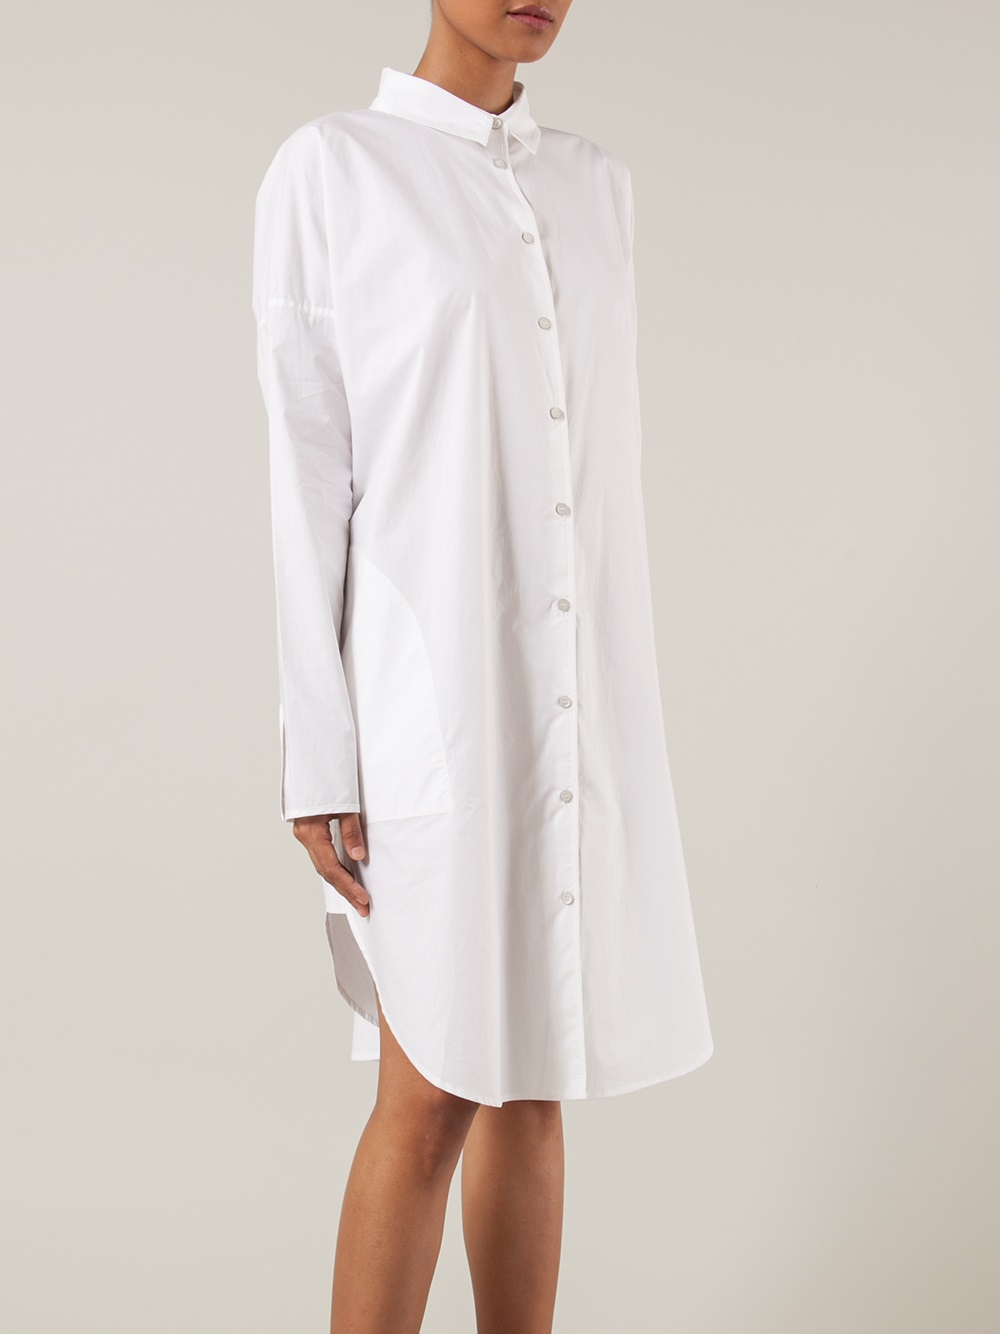 Acne Studios Shirt Dress in White - Lyst